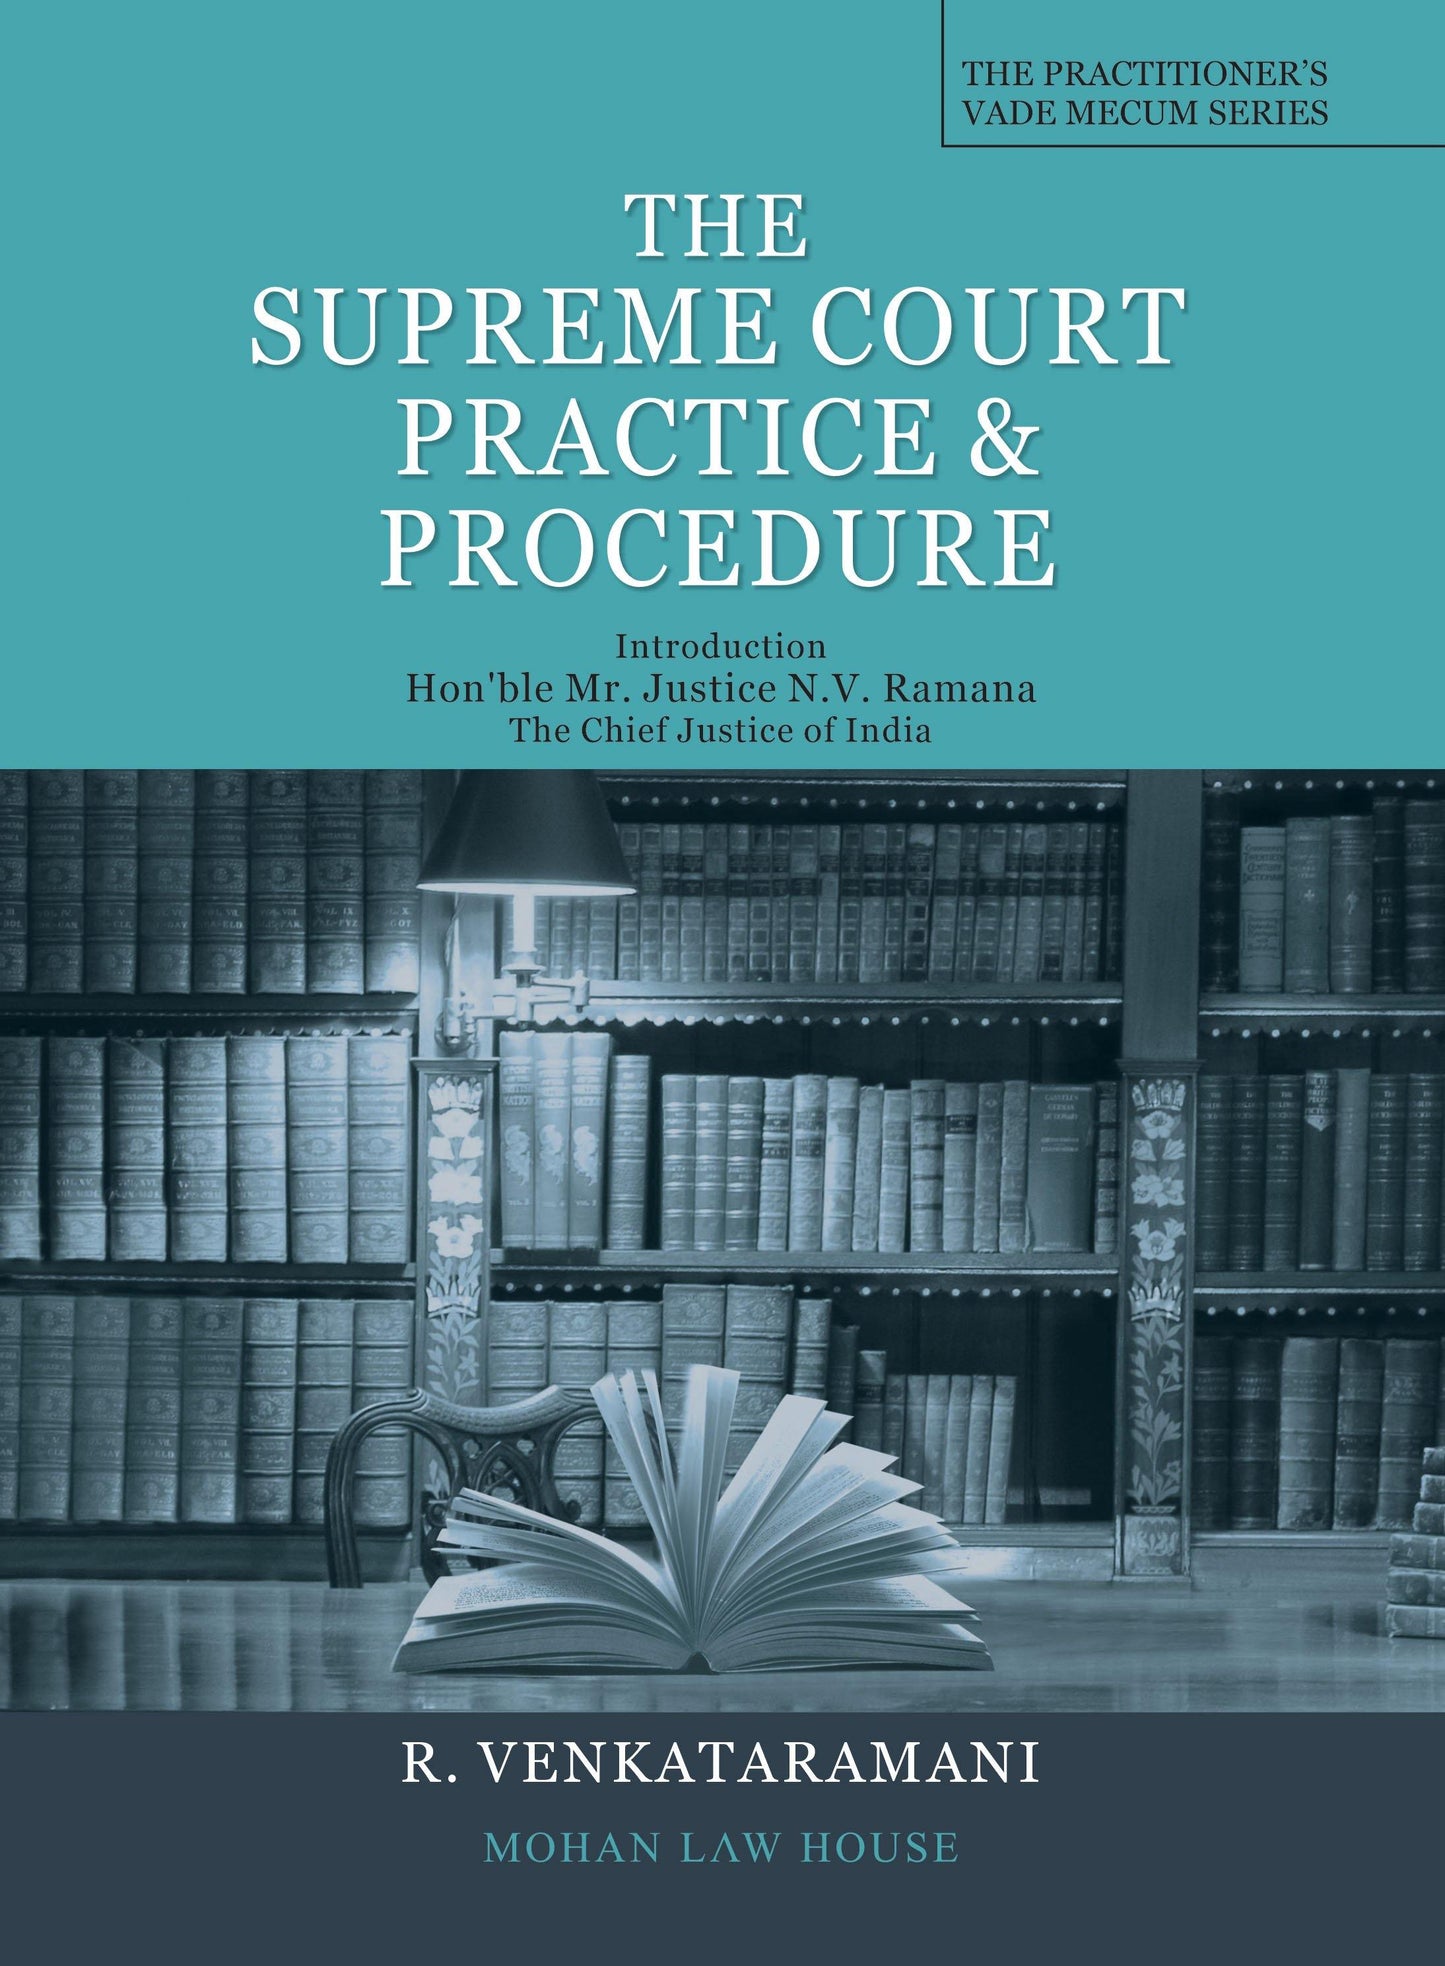 The Practitioner’s Vade Mecum Series THE SUPREME COURT PRACTICE & PROCEDURE